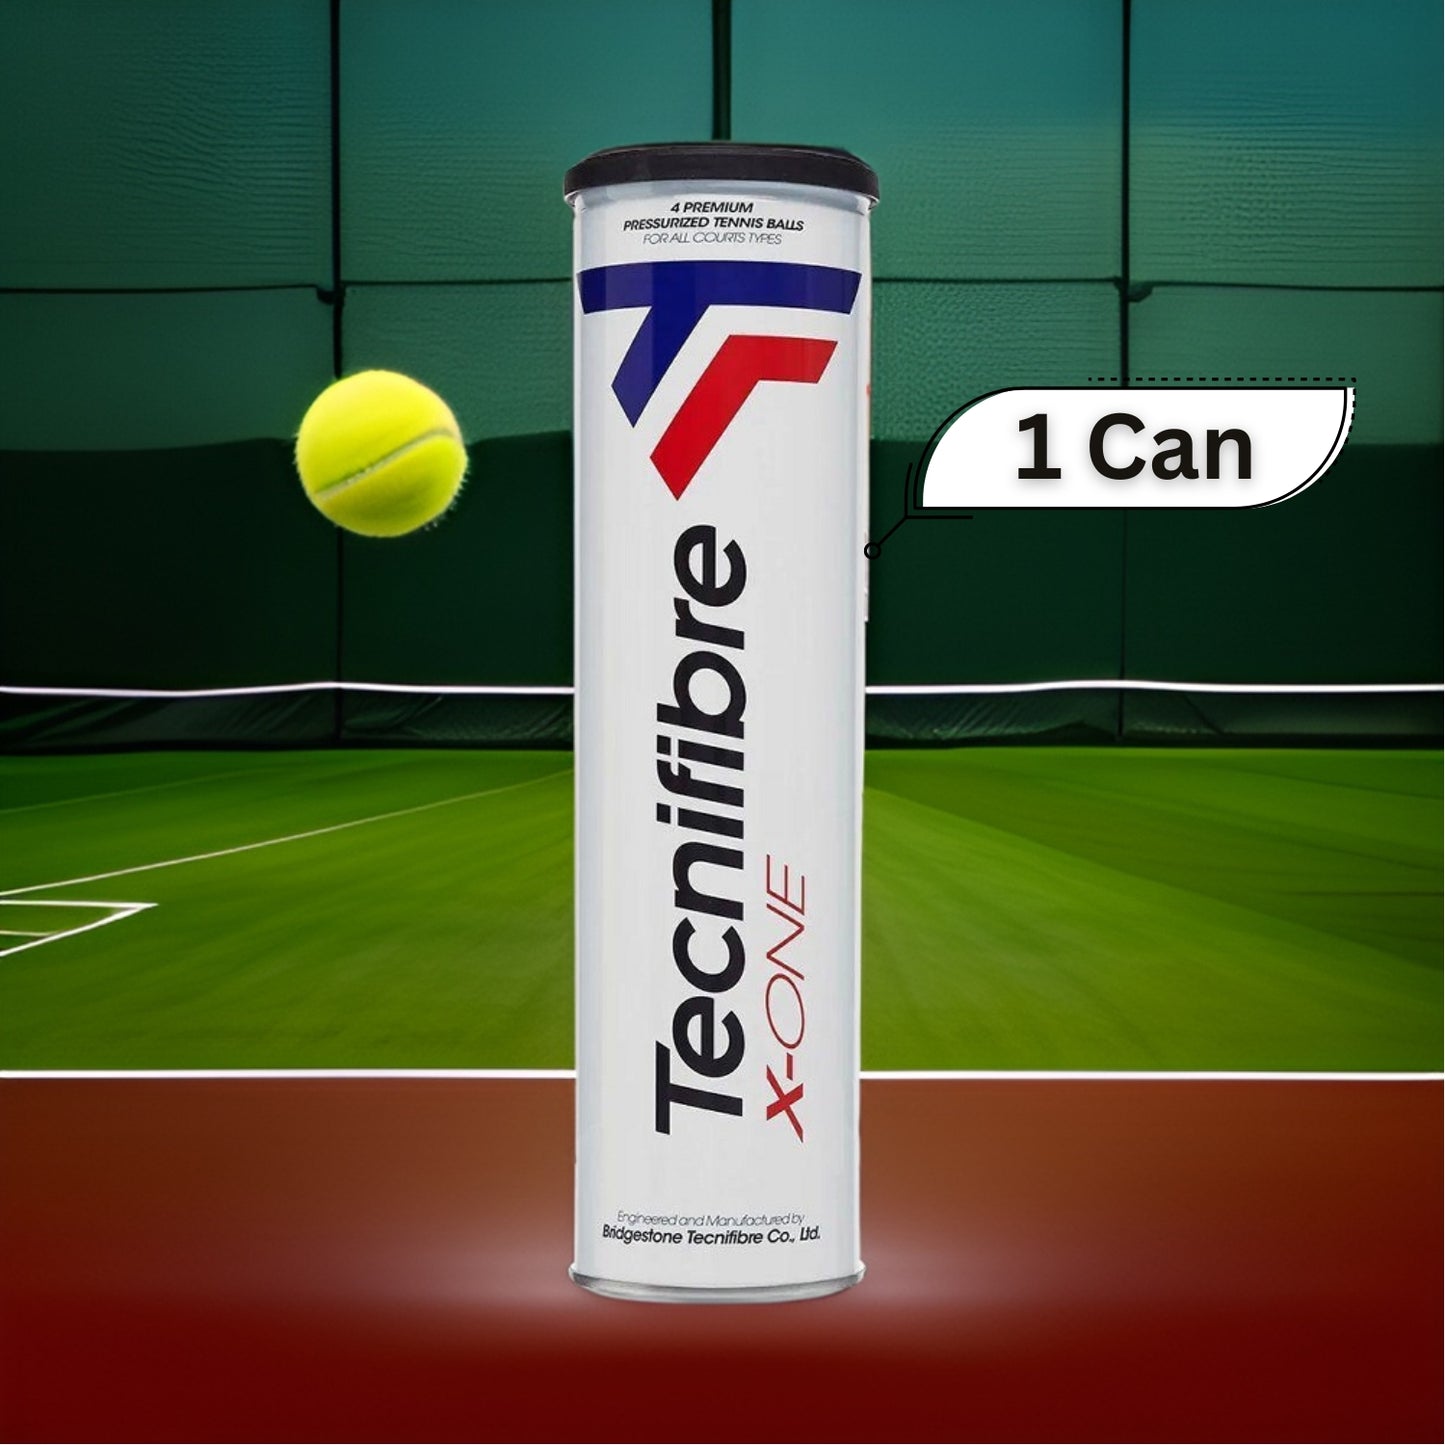 Tecnifibre X-One Tennis Balls Can (1 Can)